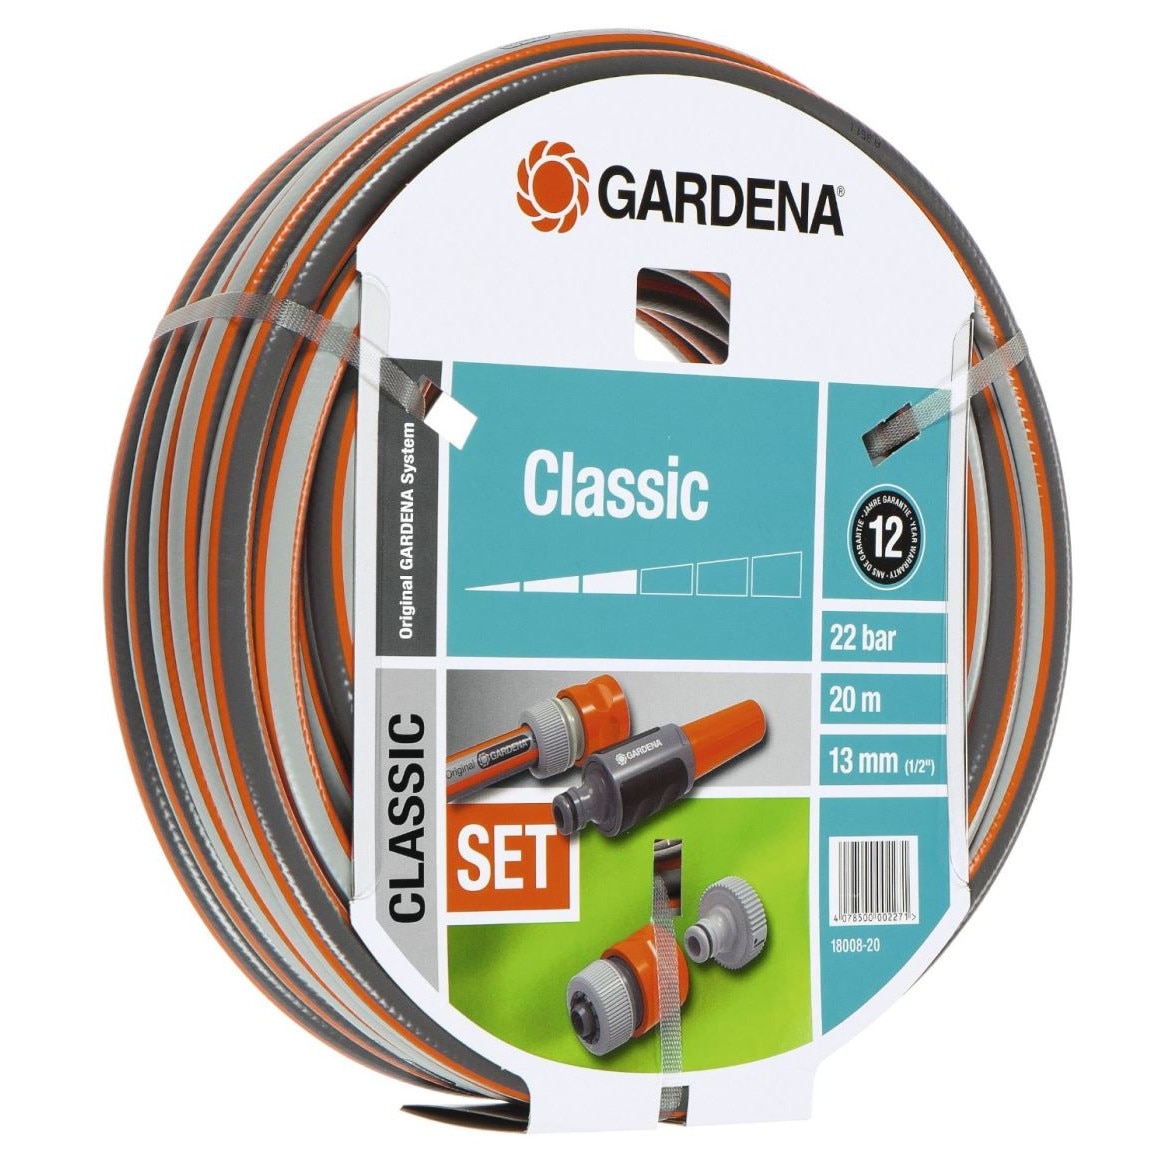 Gardena 18008-20 Furtun clasic cu elemente de sistem de 13 mm (1/2